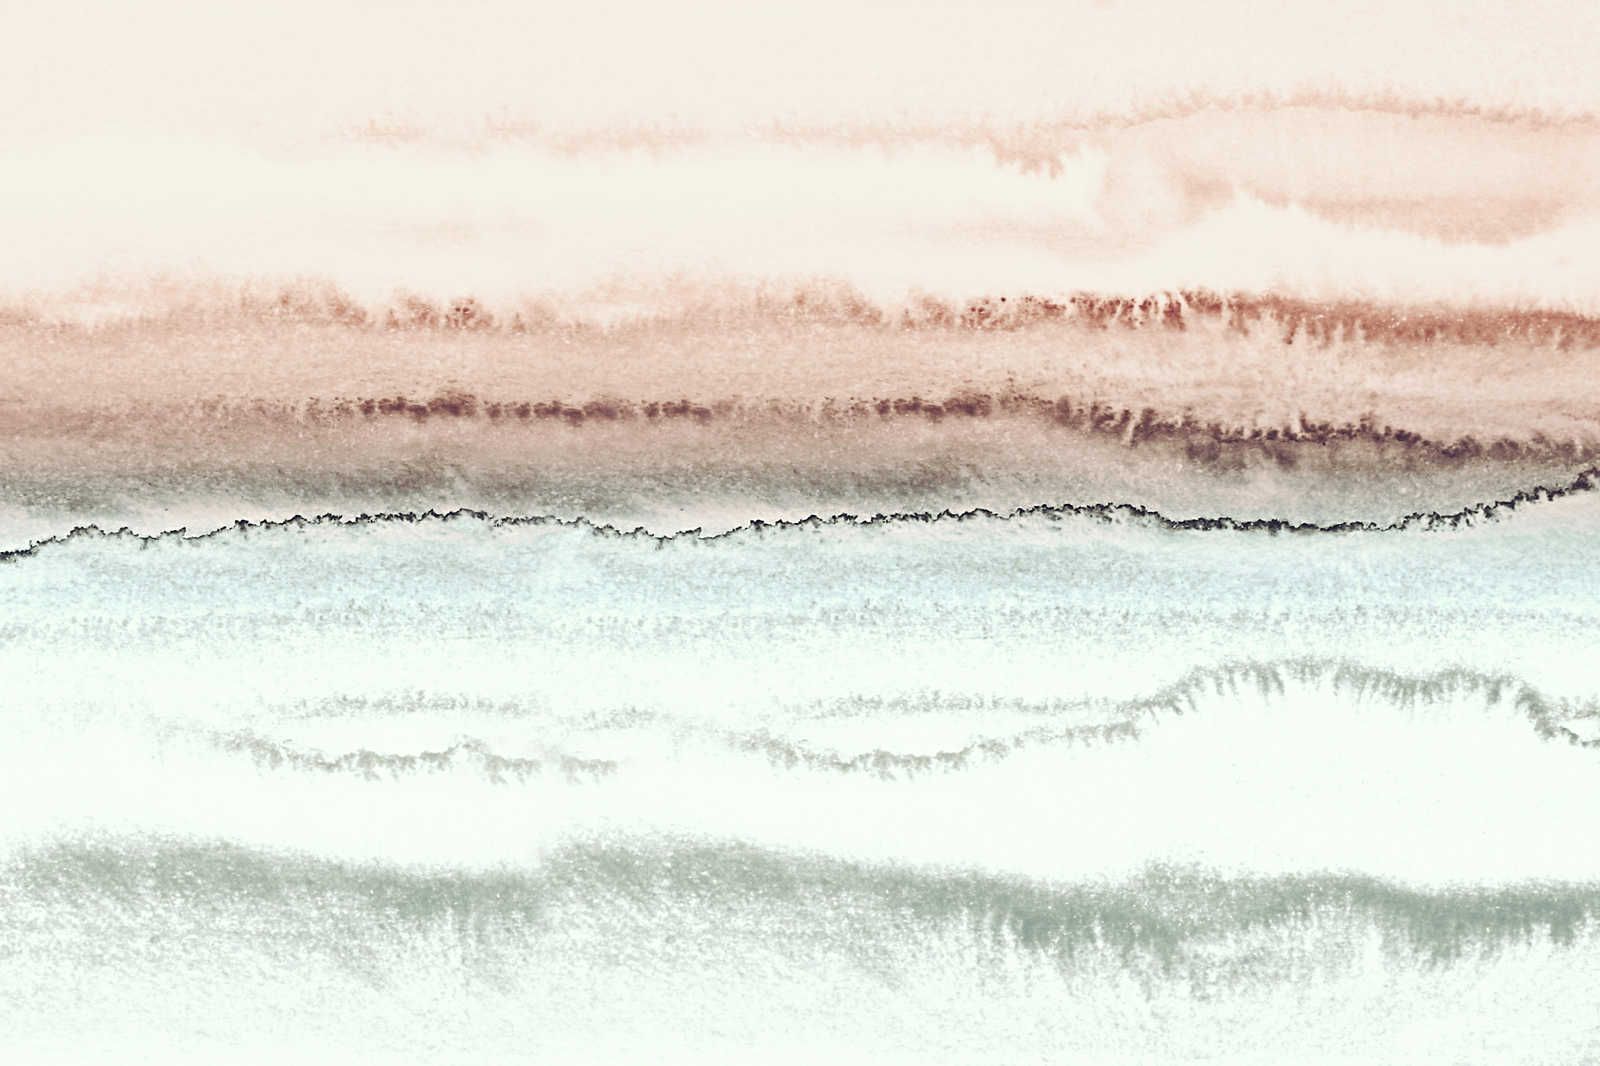             Aquarell Leinwandbild mit abstrakter Landschaft & Farbverlauf – 0,90 m x 0,60 m
        